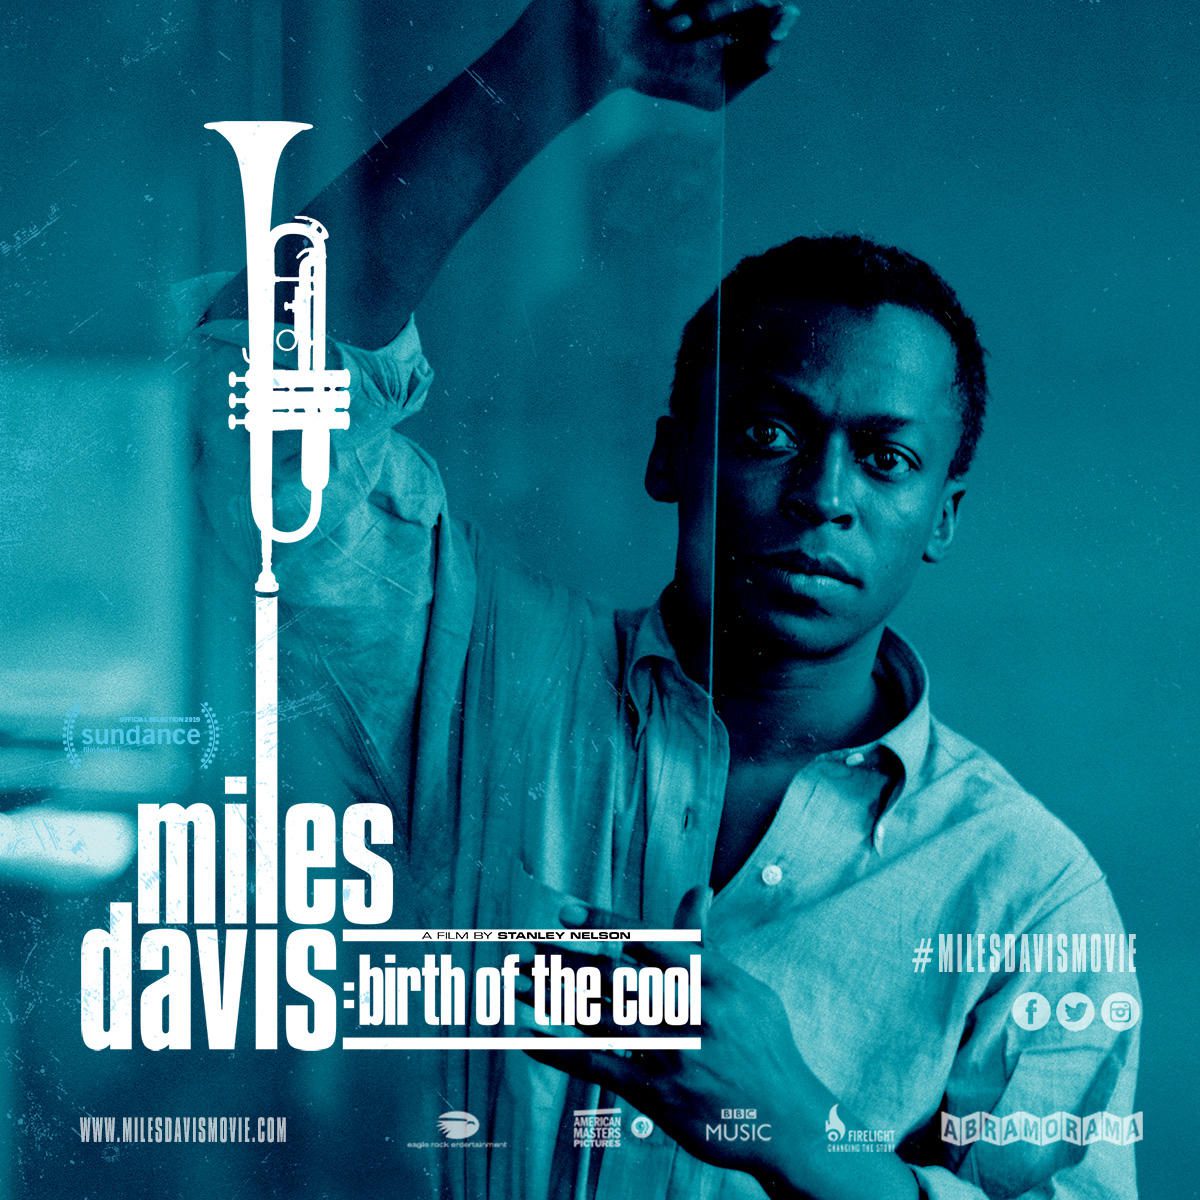 Miles Davis: The birth of cool